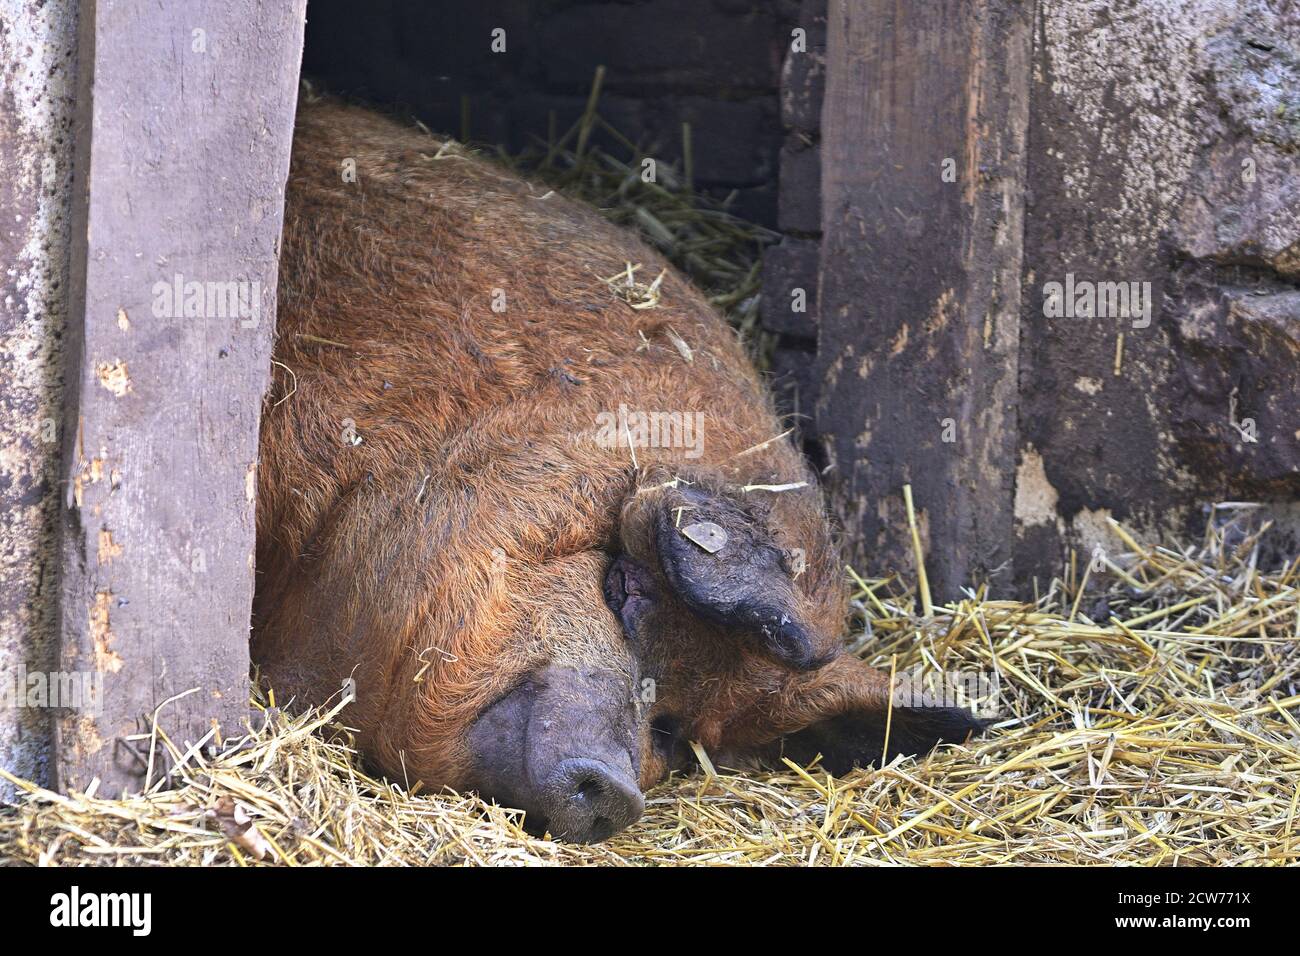 Ernstbrunn, Lower Austria, Austria. Sleeping pot-bellied pig (Sus scrofa domesticus) in the enclosure Stock Photo